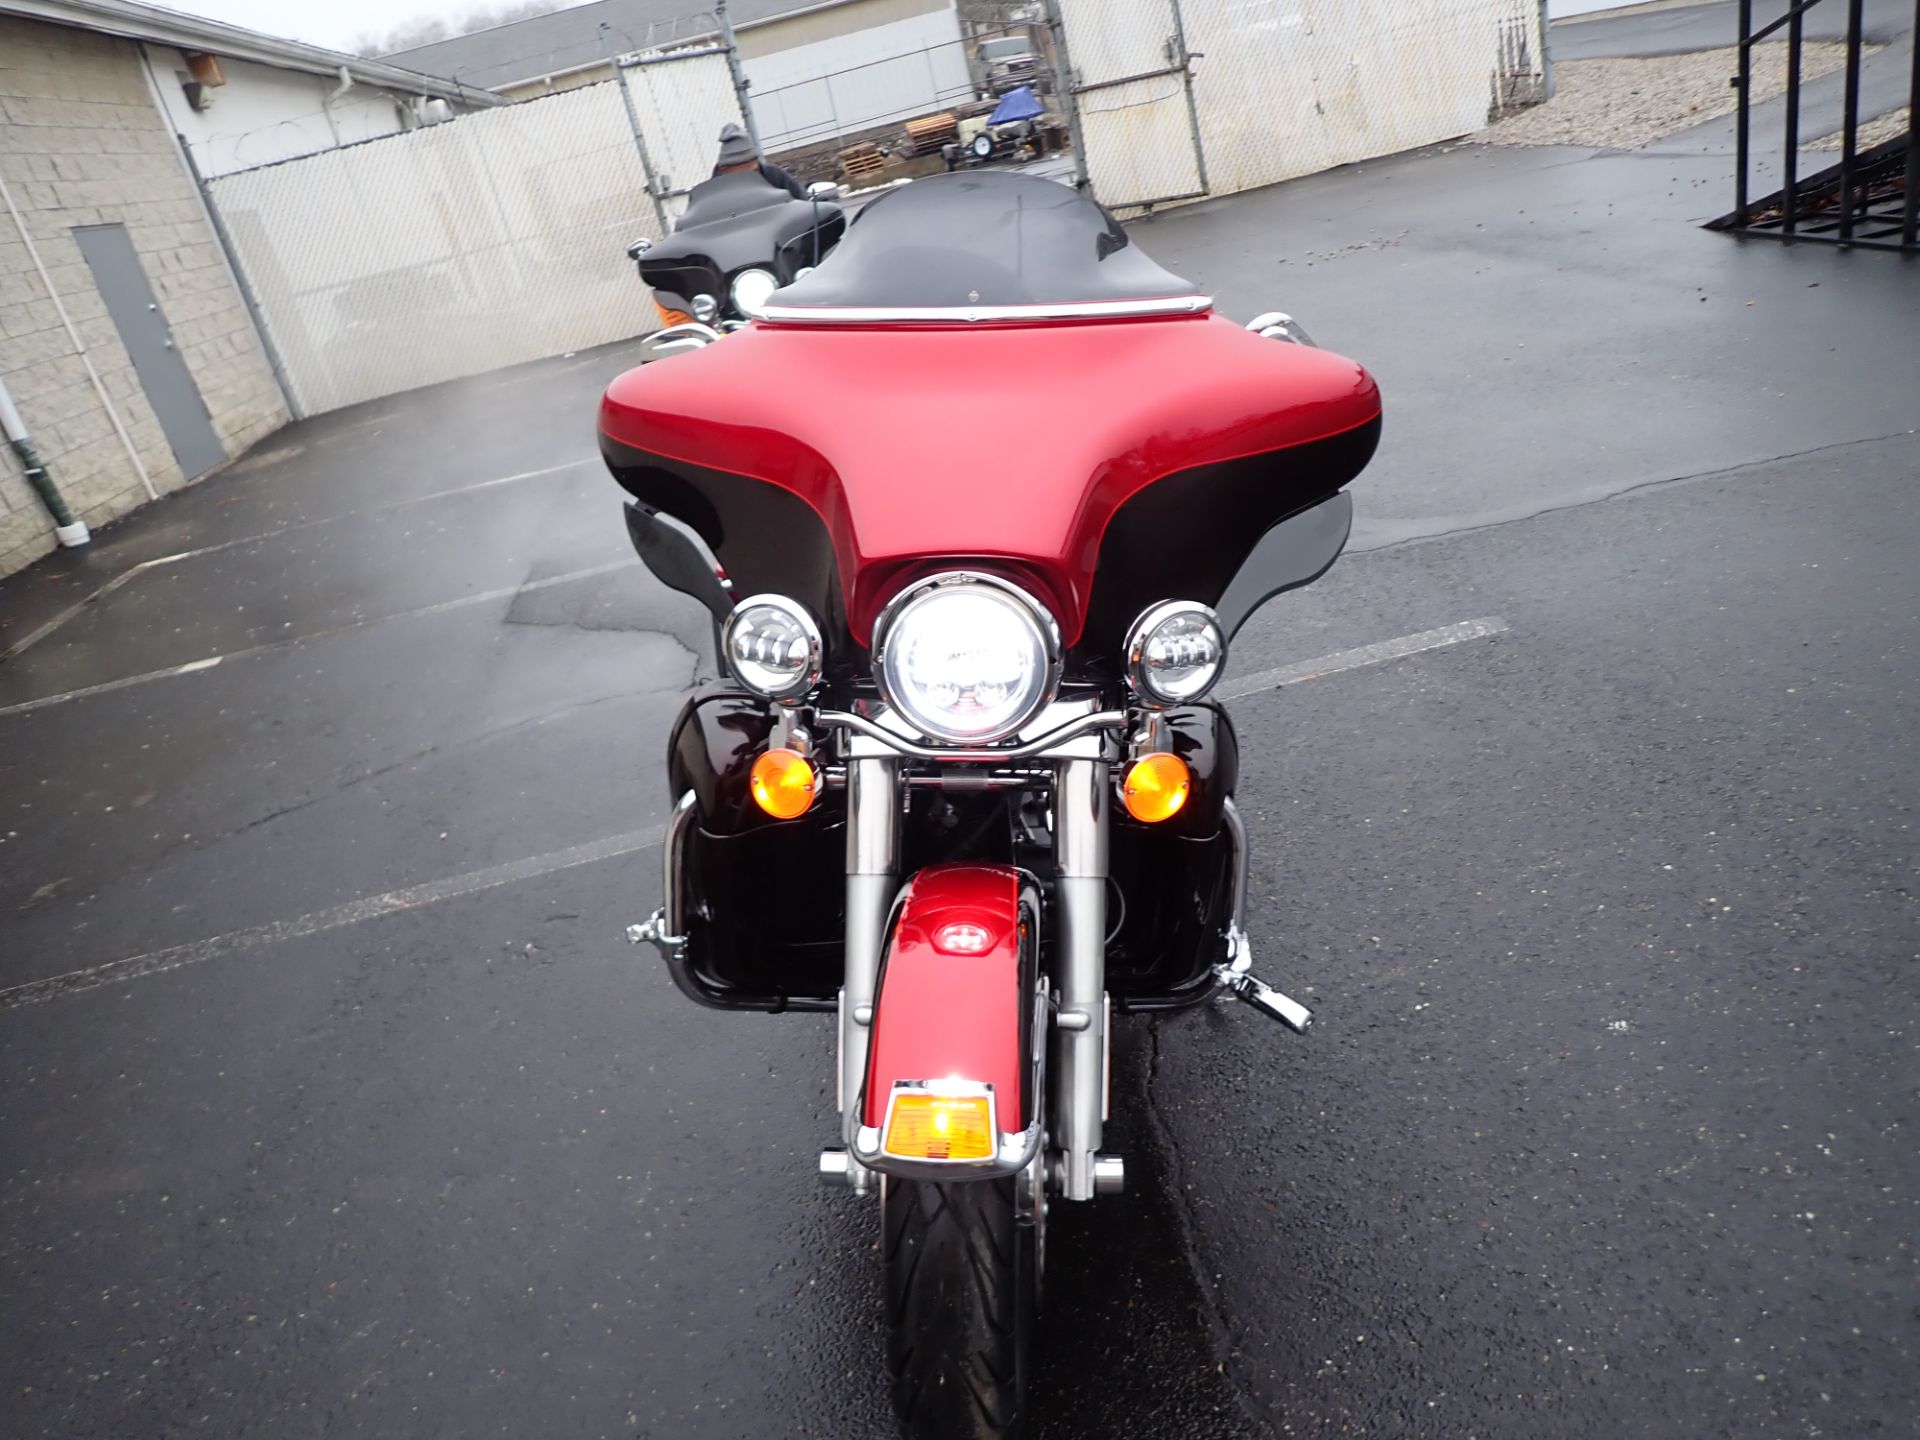 2012 Harley-Davidson Electra Glide® Ultra Limited in Massillon, Ohio - Photo 11